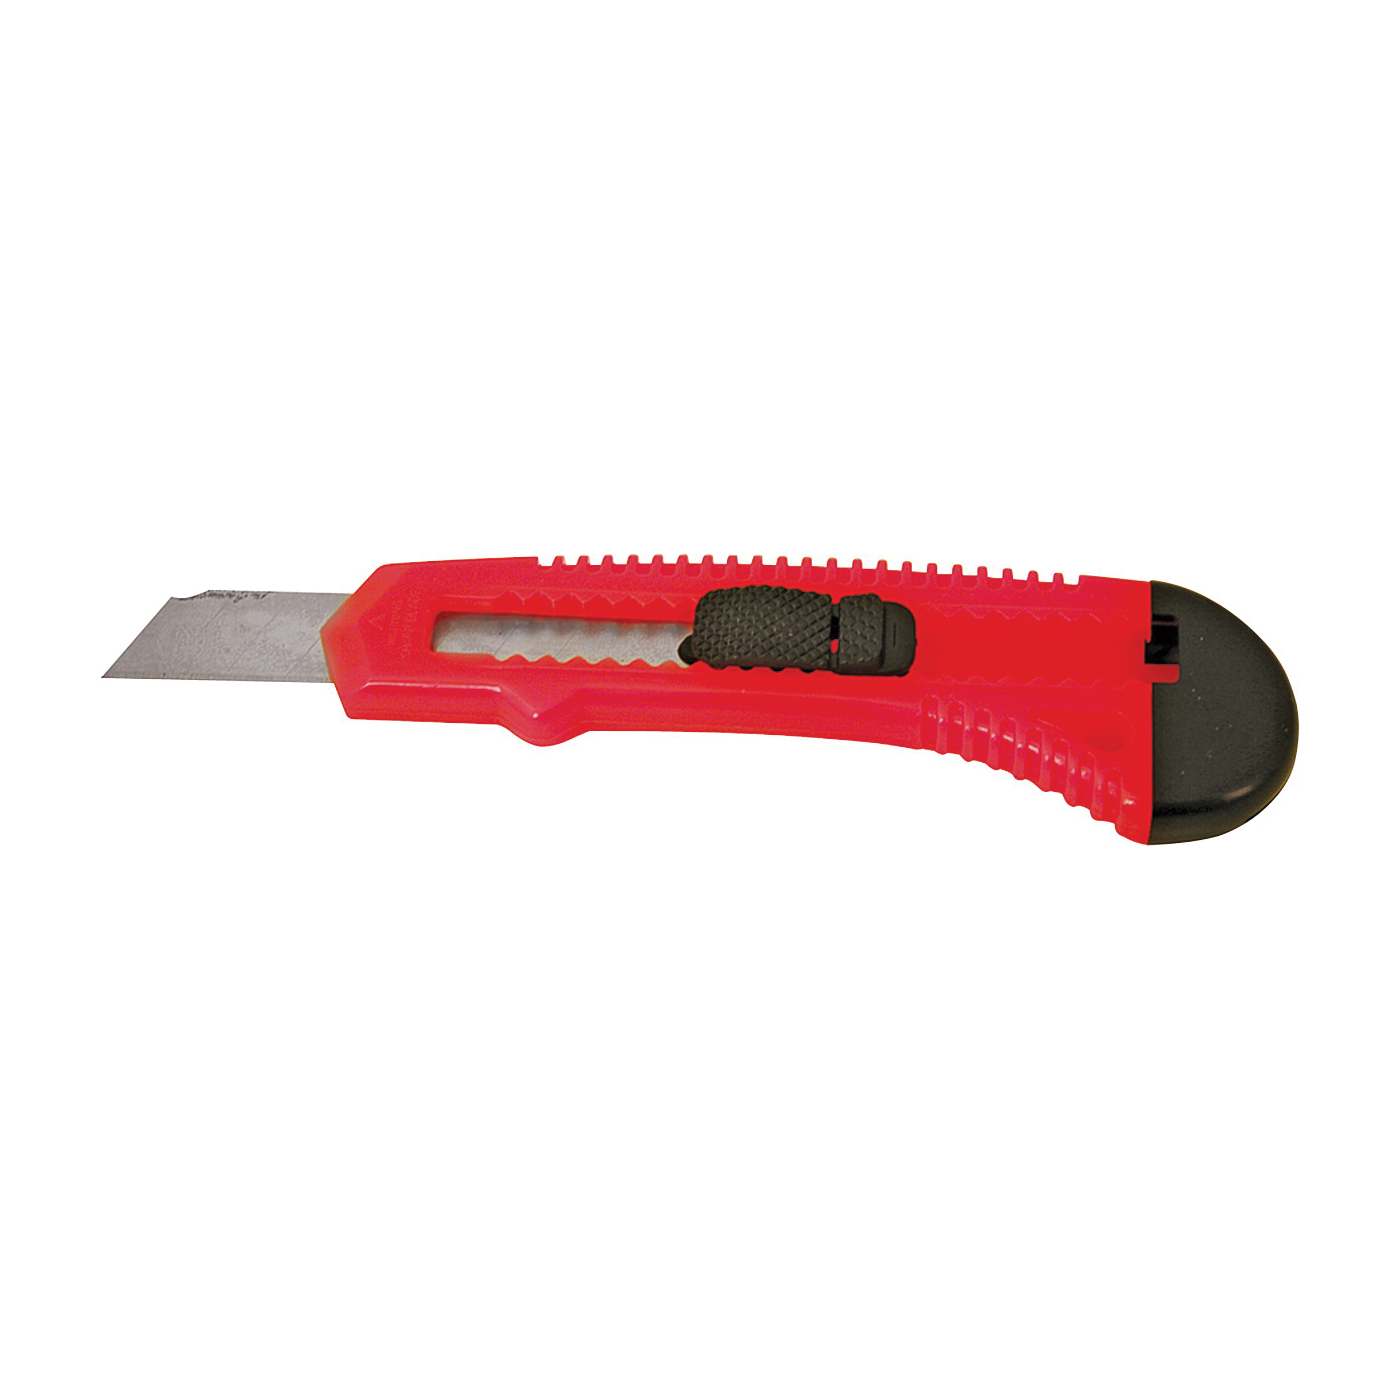 JL-54306-D3L Utility Knife, 18 mm W Blade, Steel Blade, Ergonomic Handle